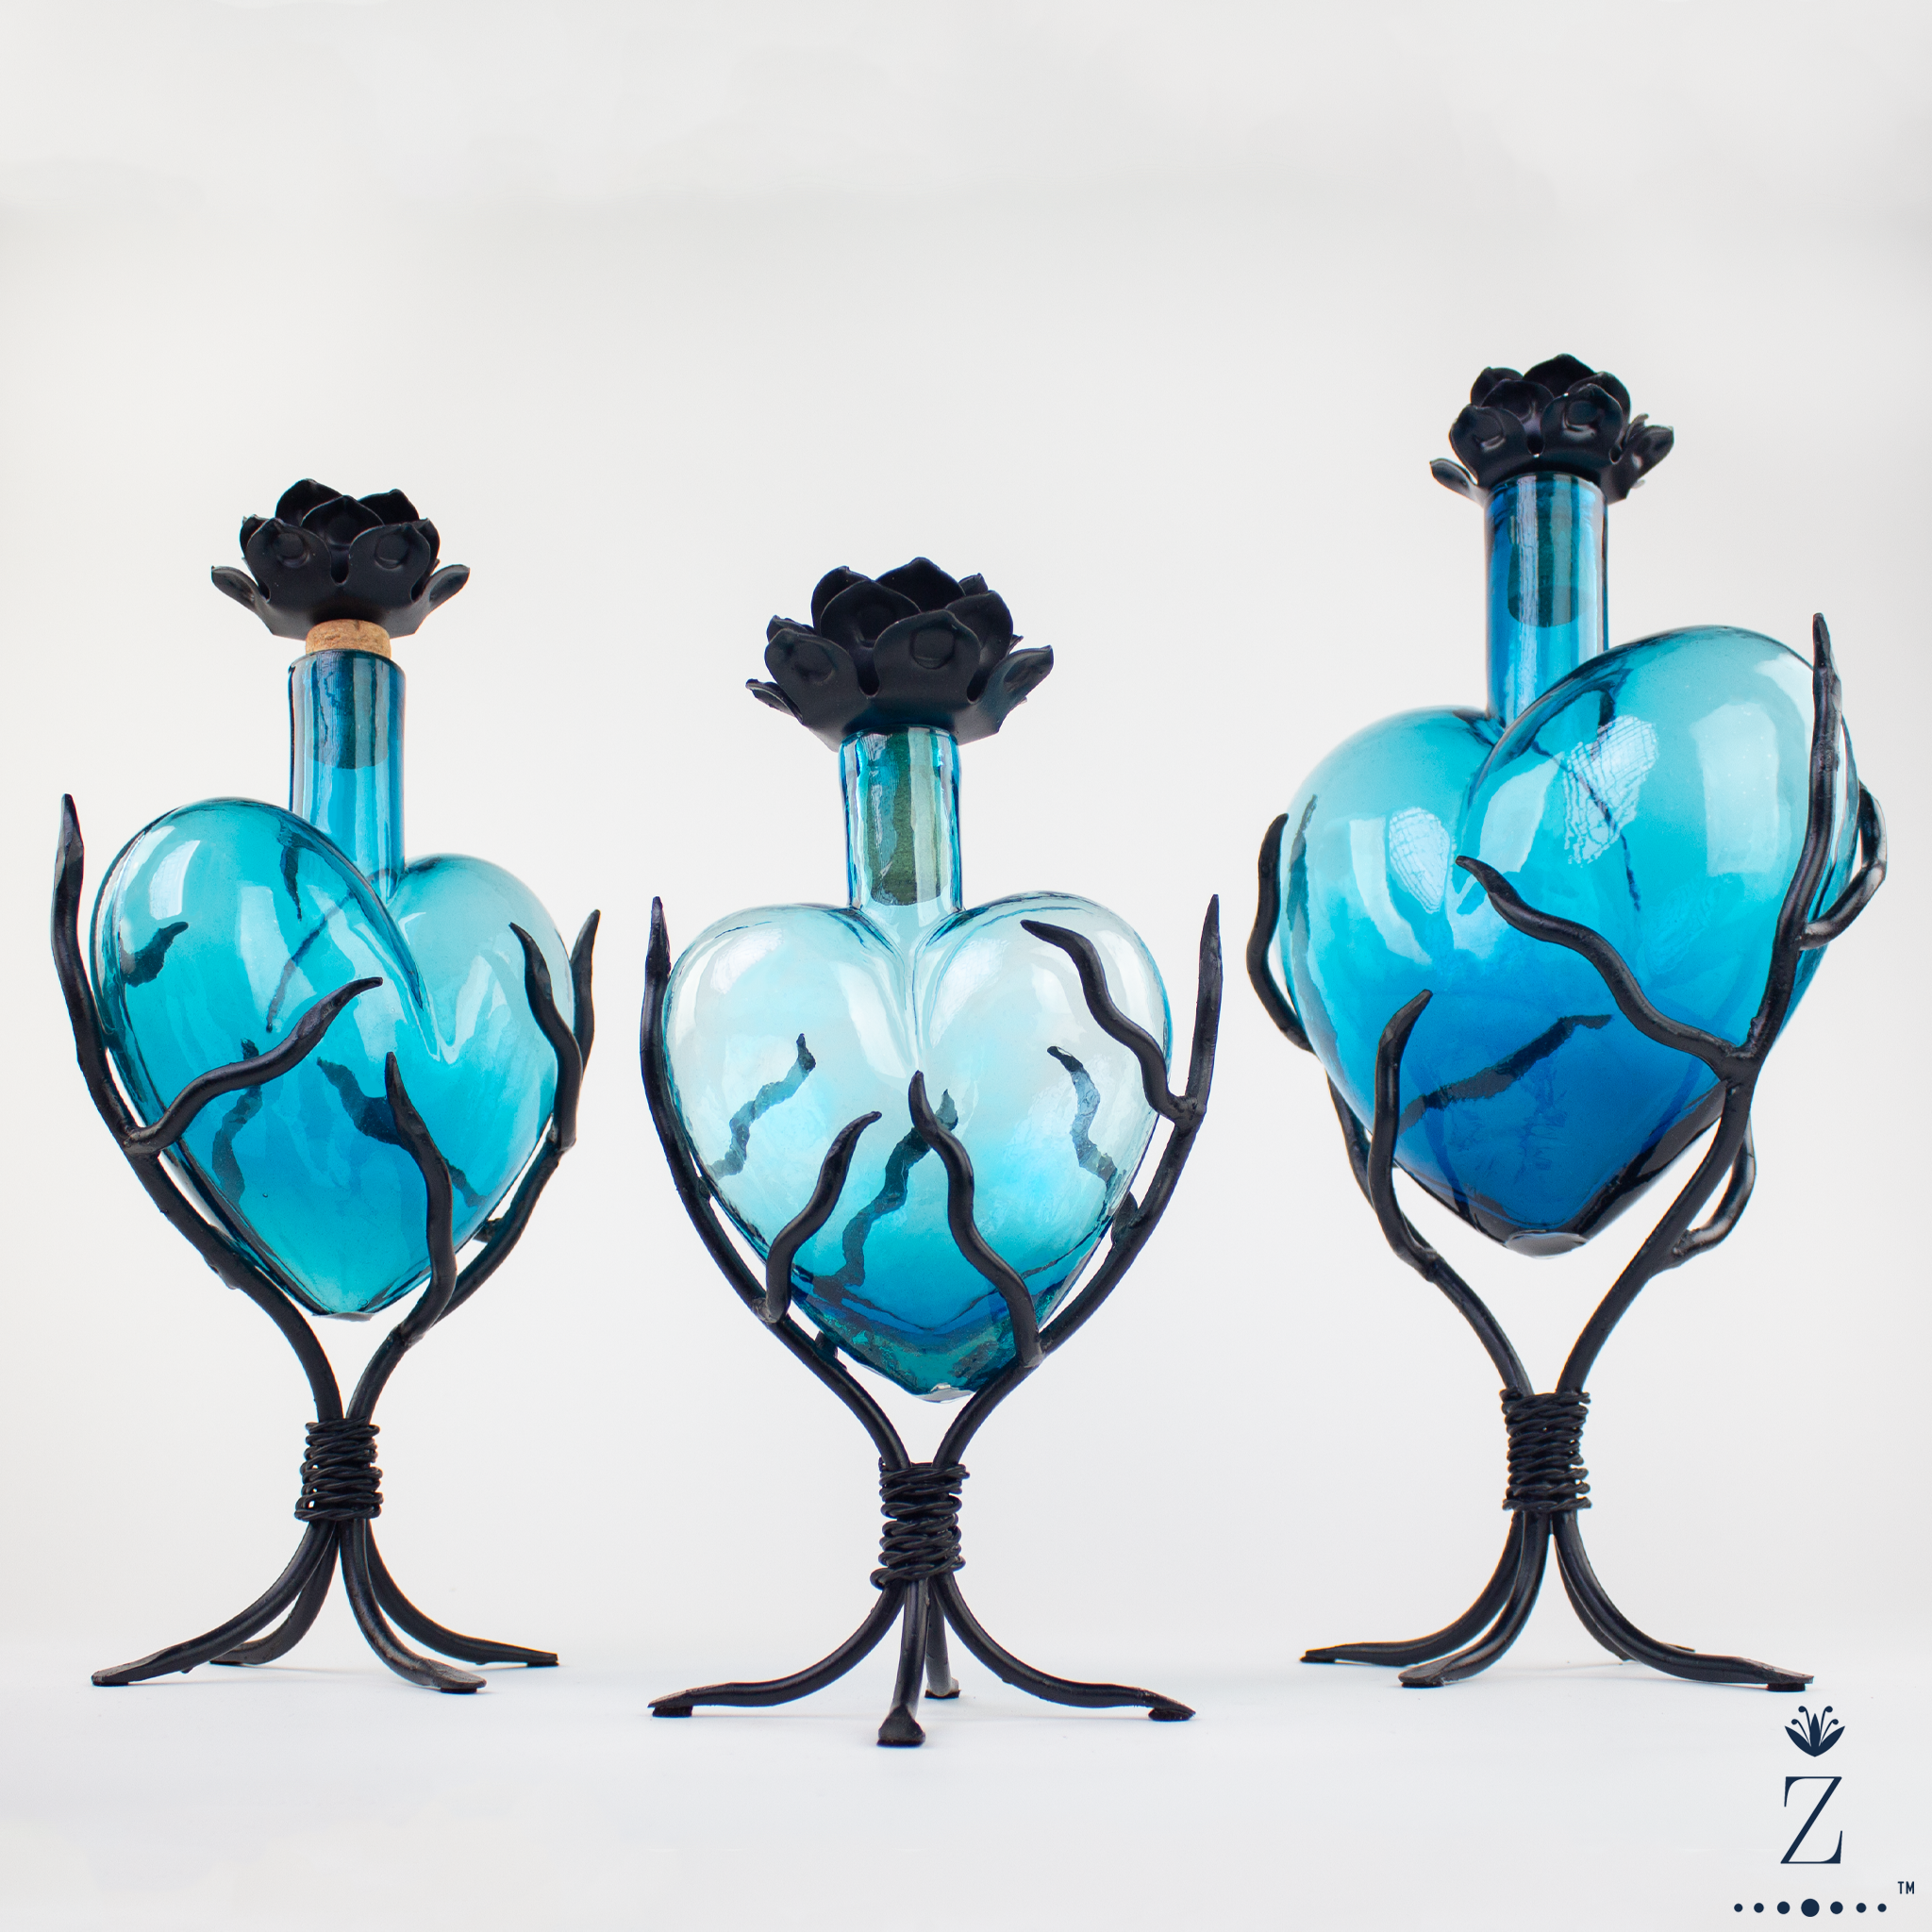 Blown Glass Tumblers, Tall. Two Tone Aqua and Amber Glassware - Zenwaro